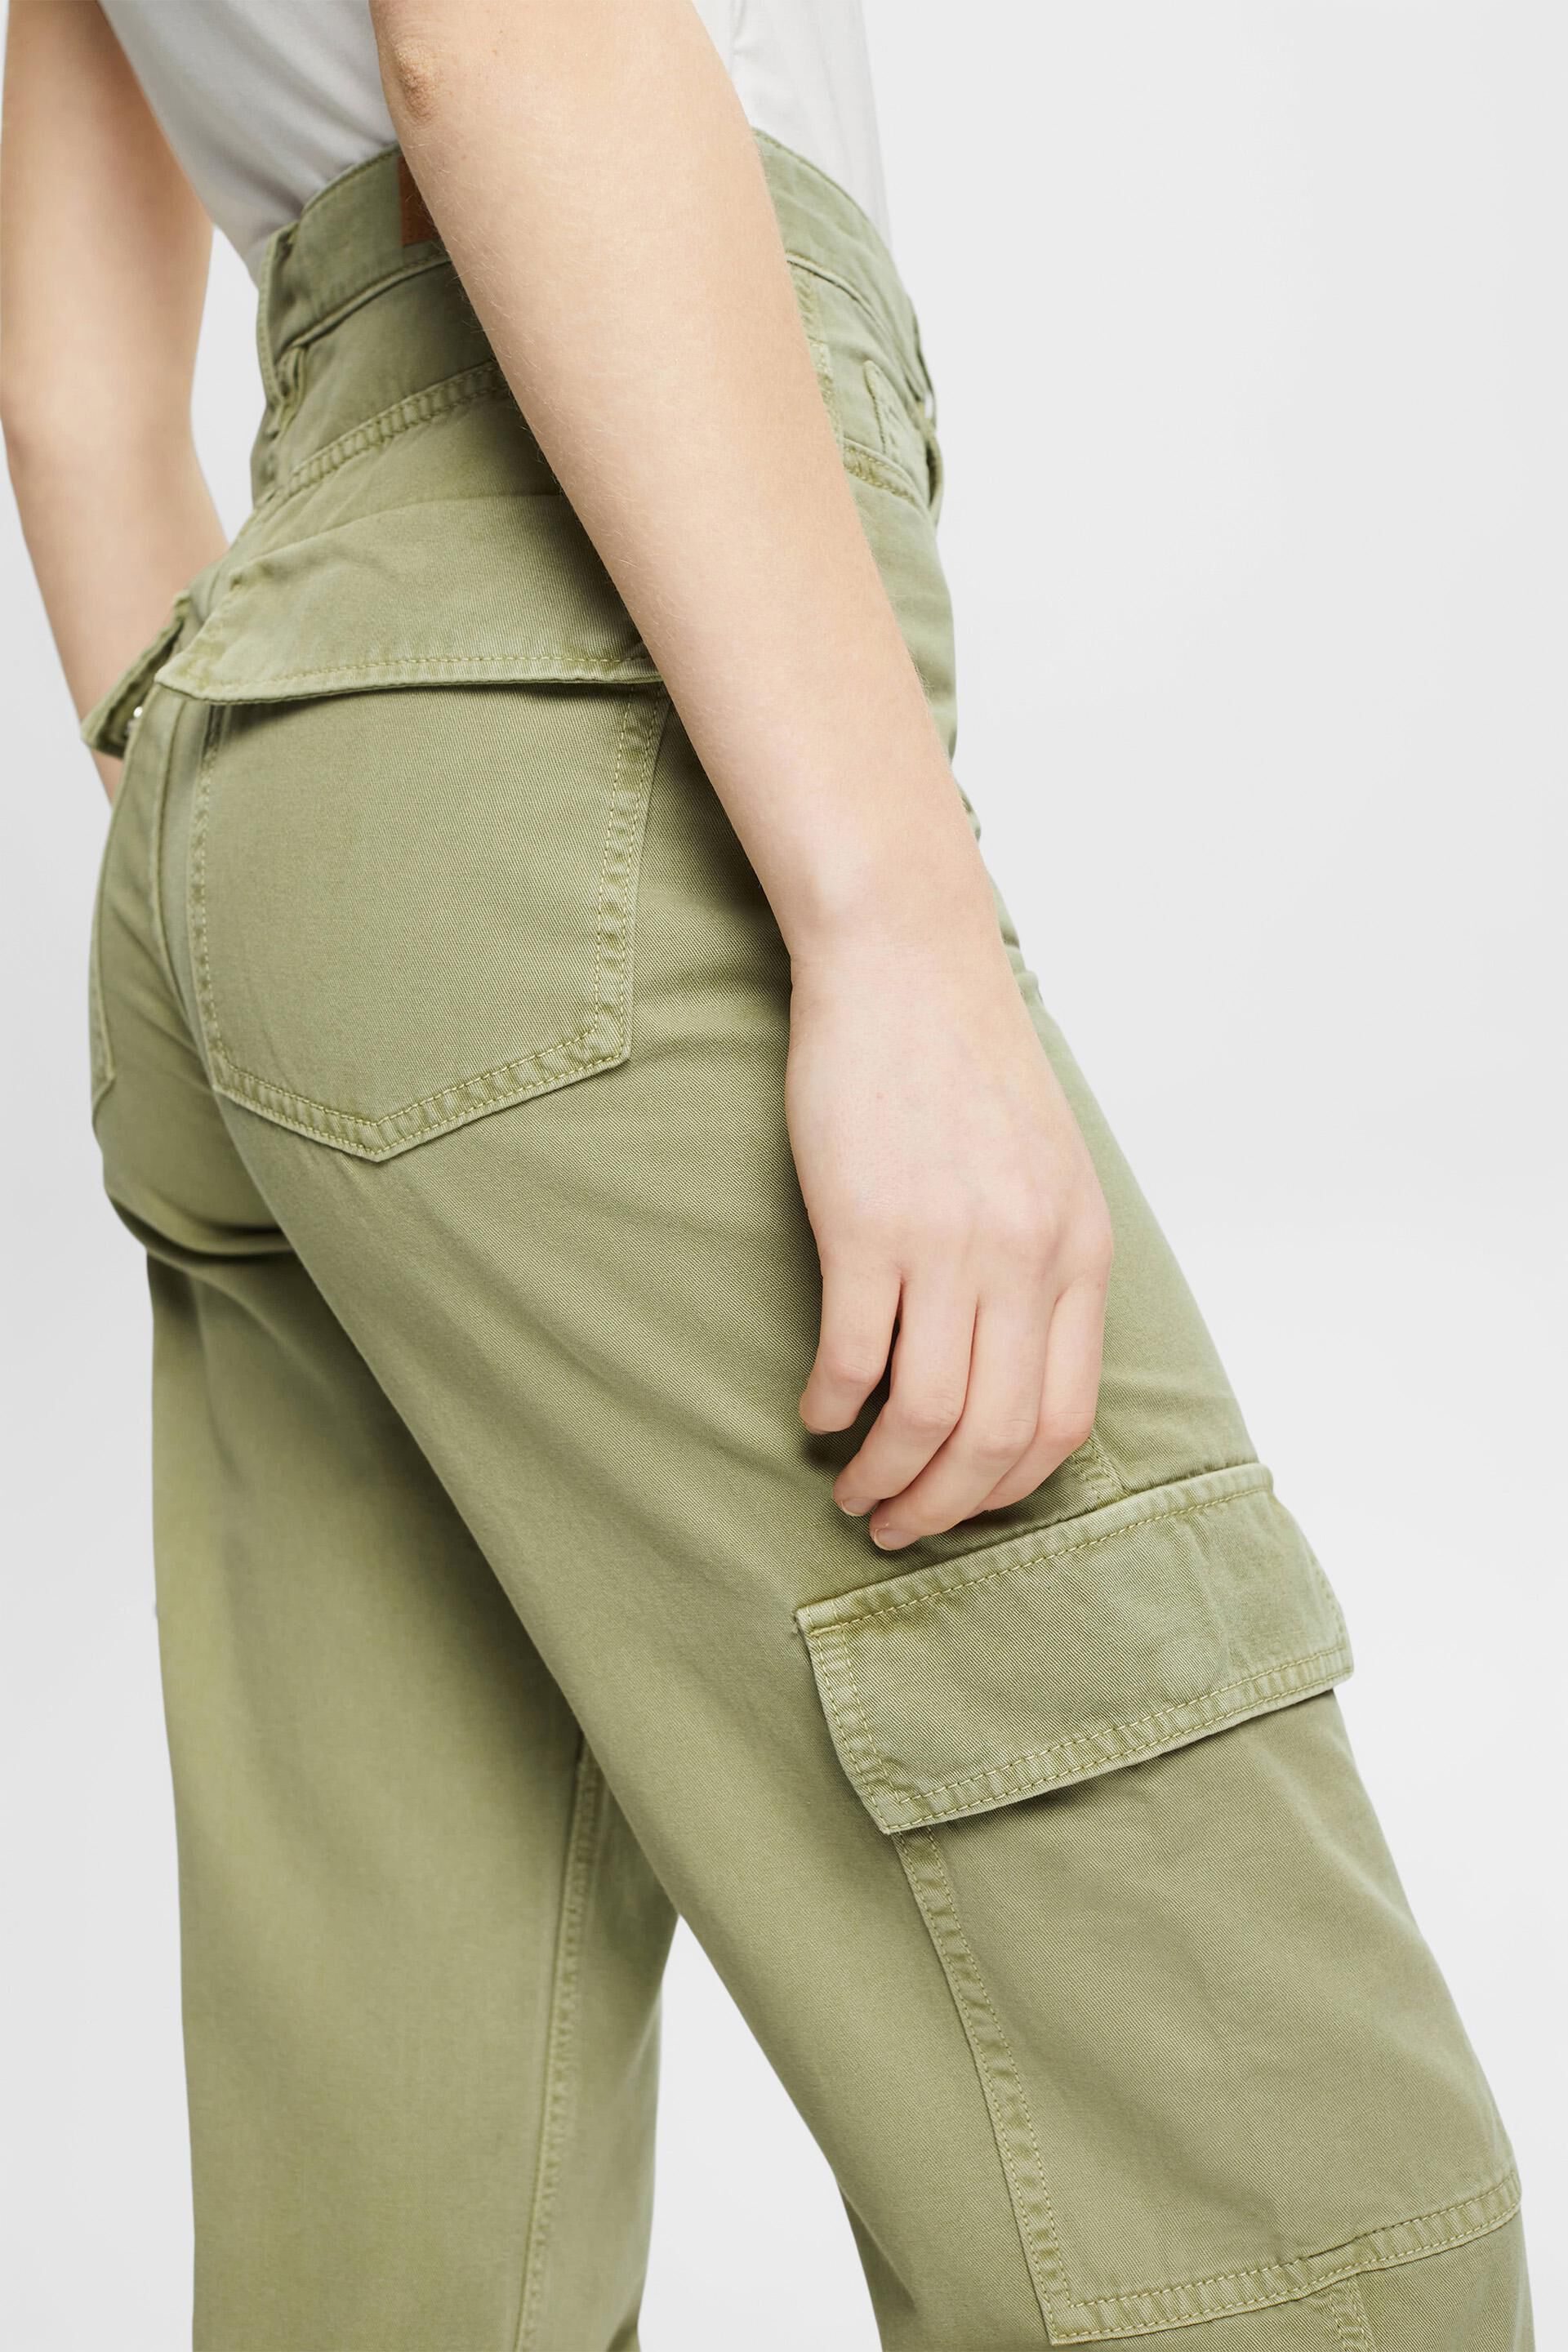 SKYLINEWEARS Women's Tactical Pants Combat Cargo Trousers Utility Work  Pants | eBay